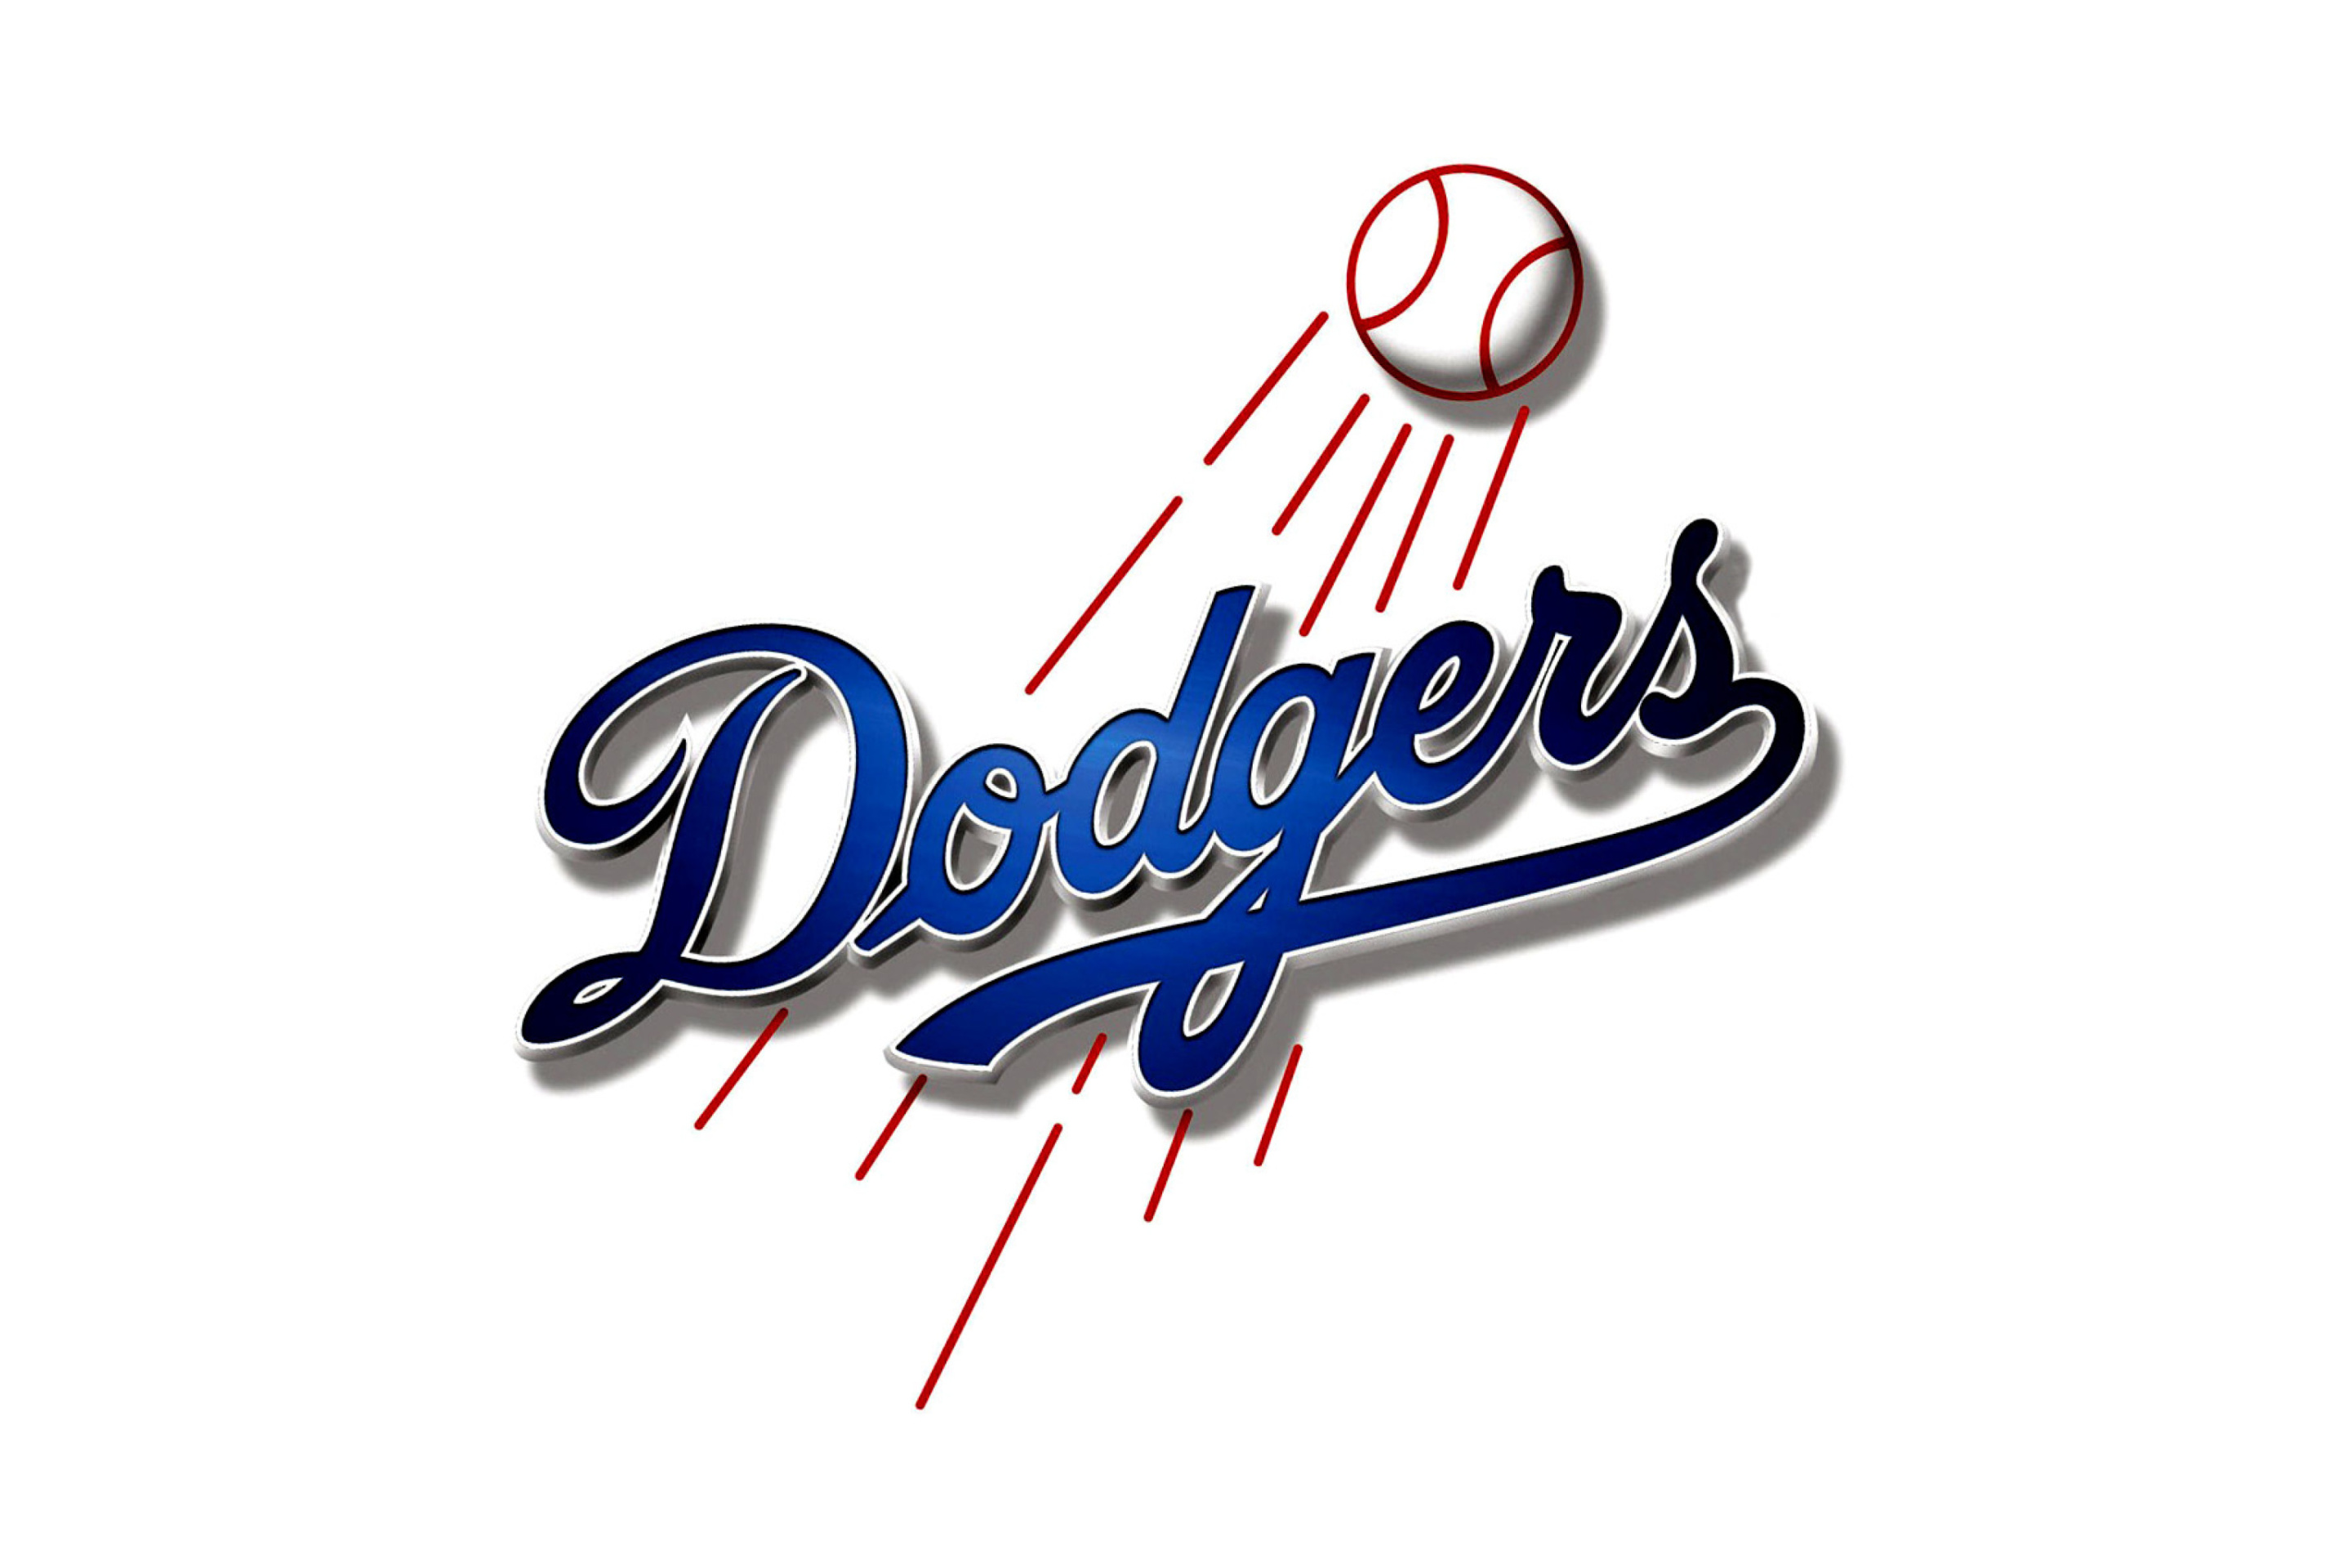 Los Angeles Dodgers Baseball wallpaper 2880x1920